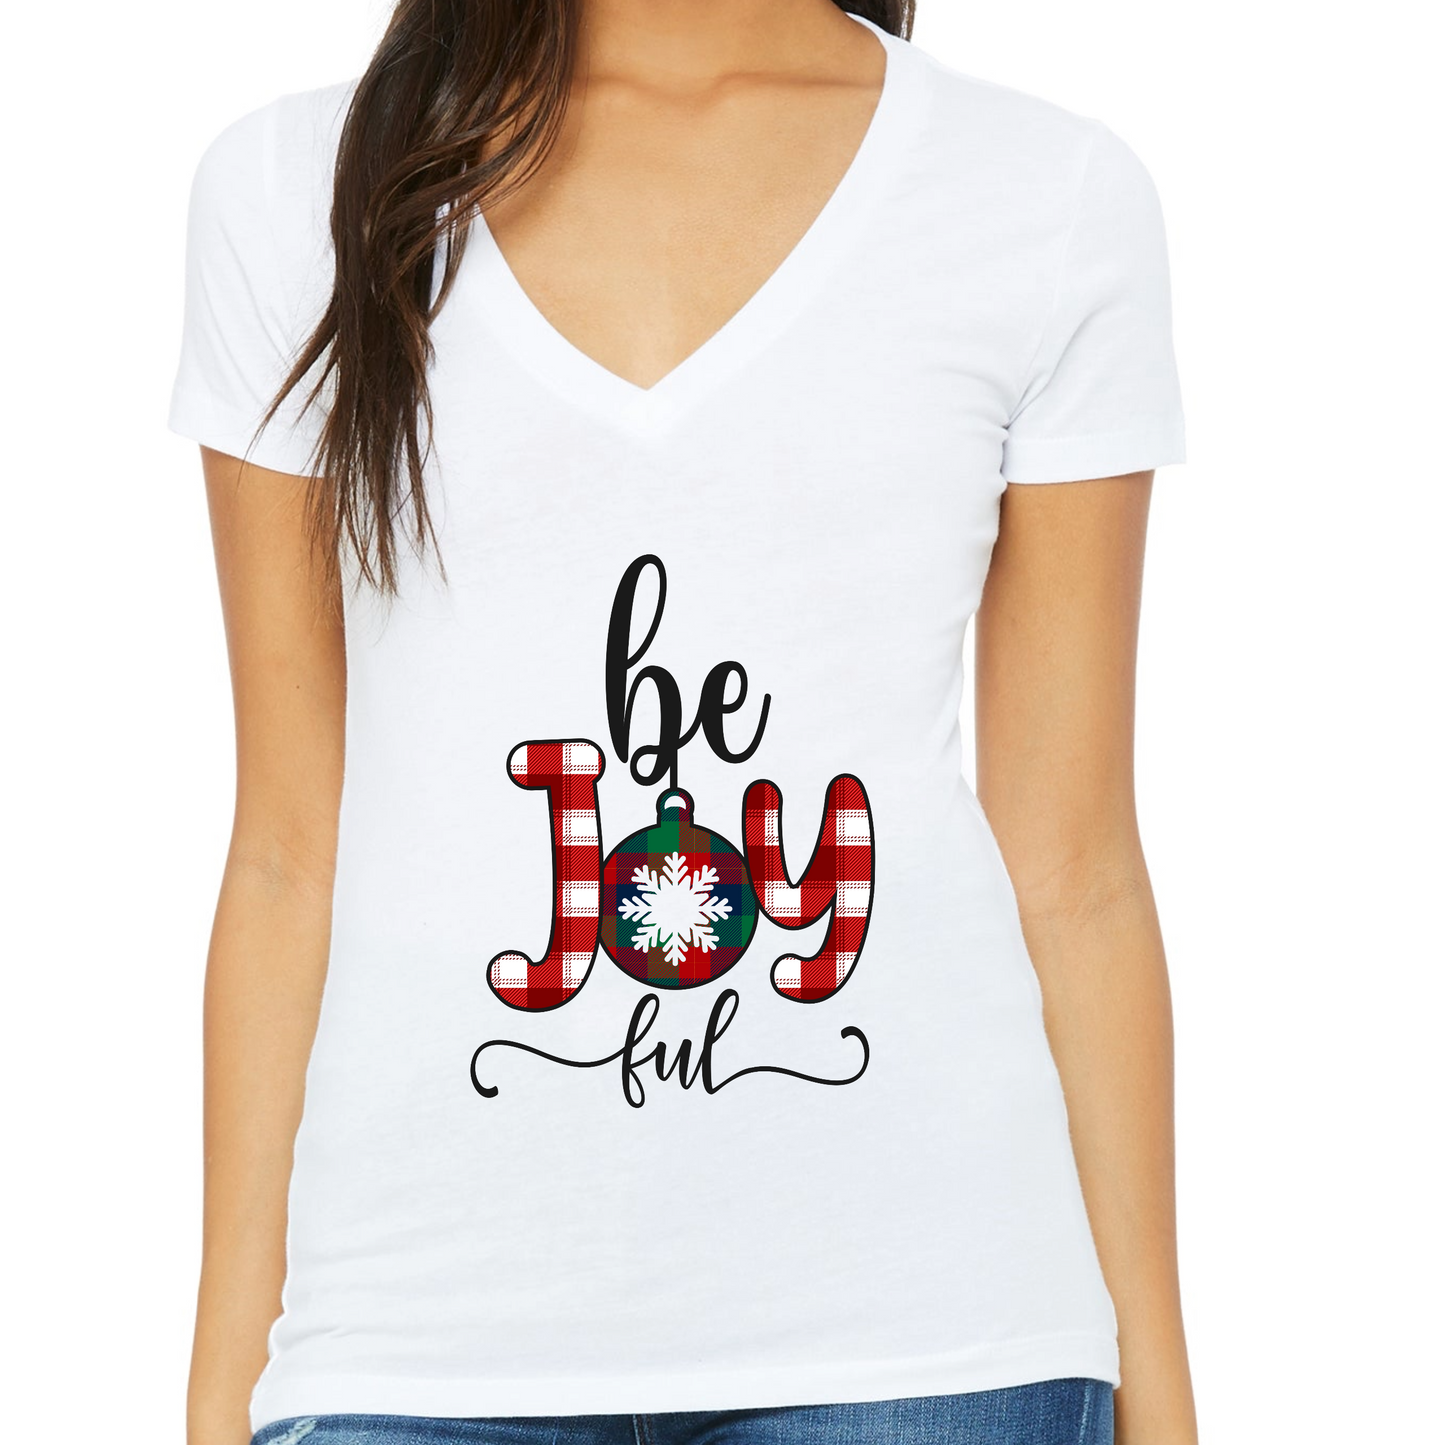 Joyful T-Shirt For Christmas TShirt For Holiday Cheer T Shirt